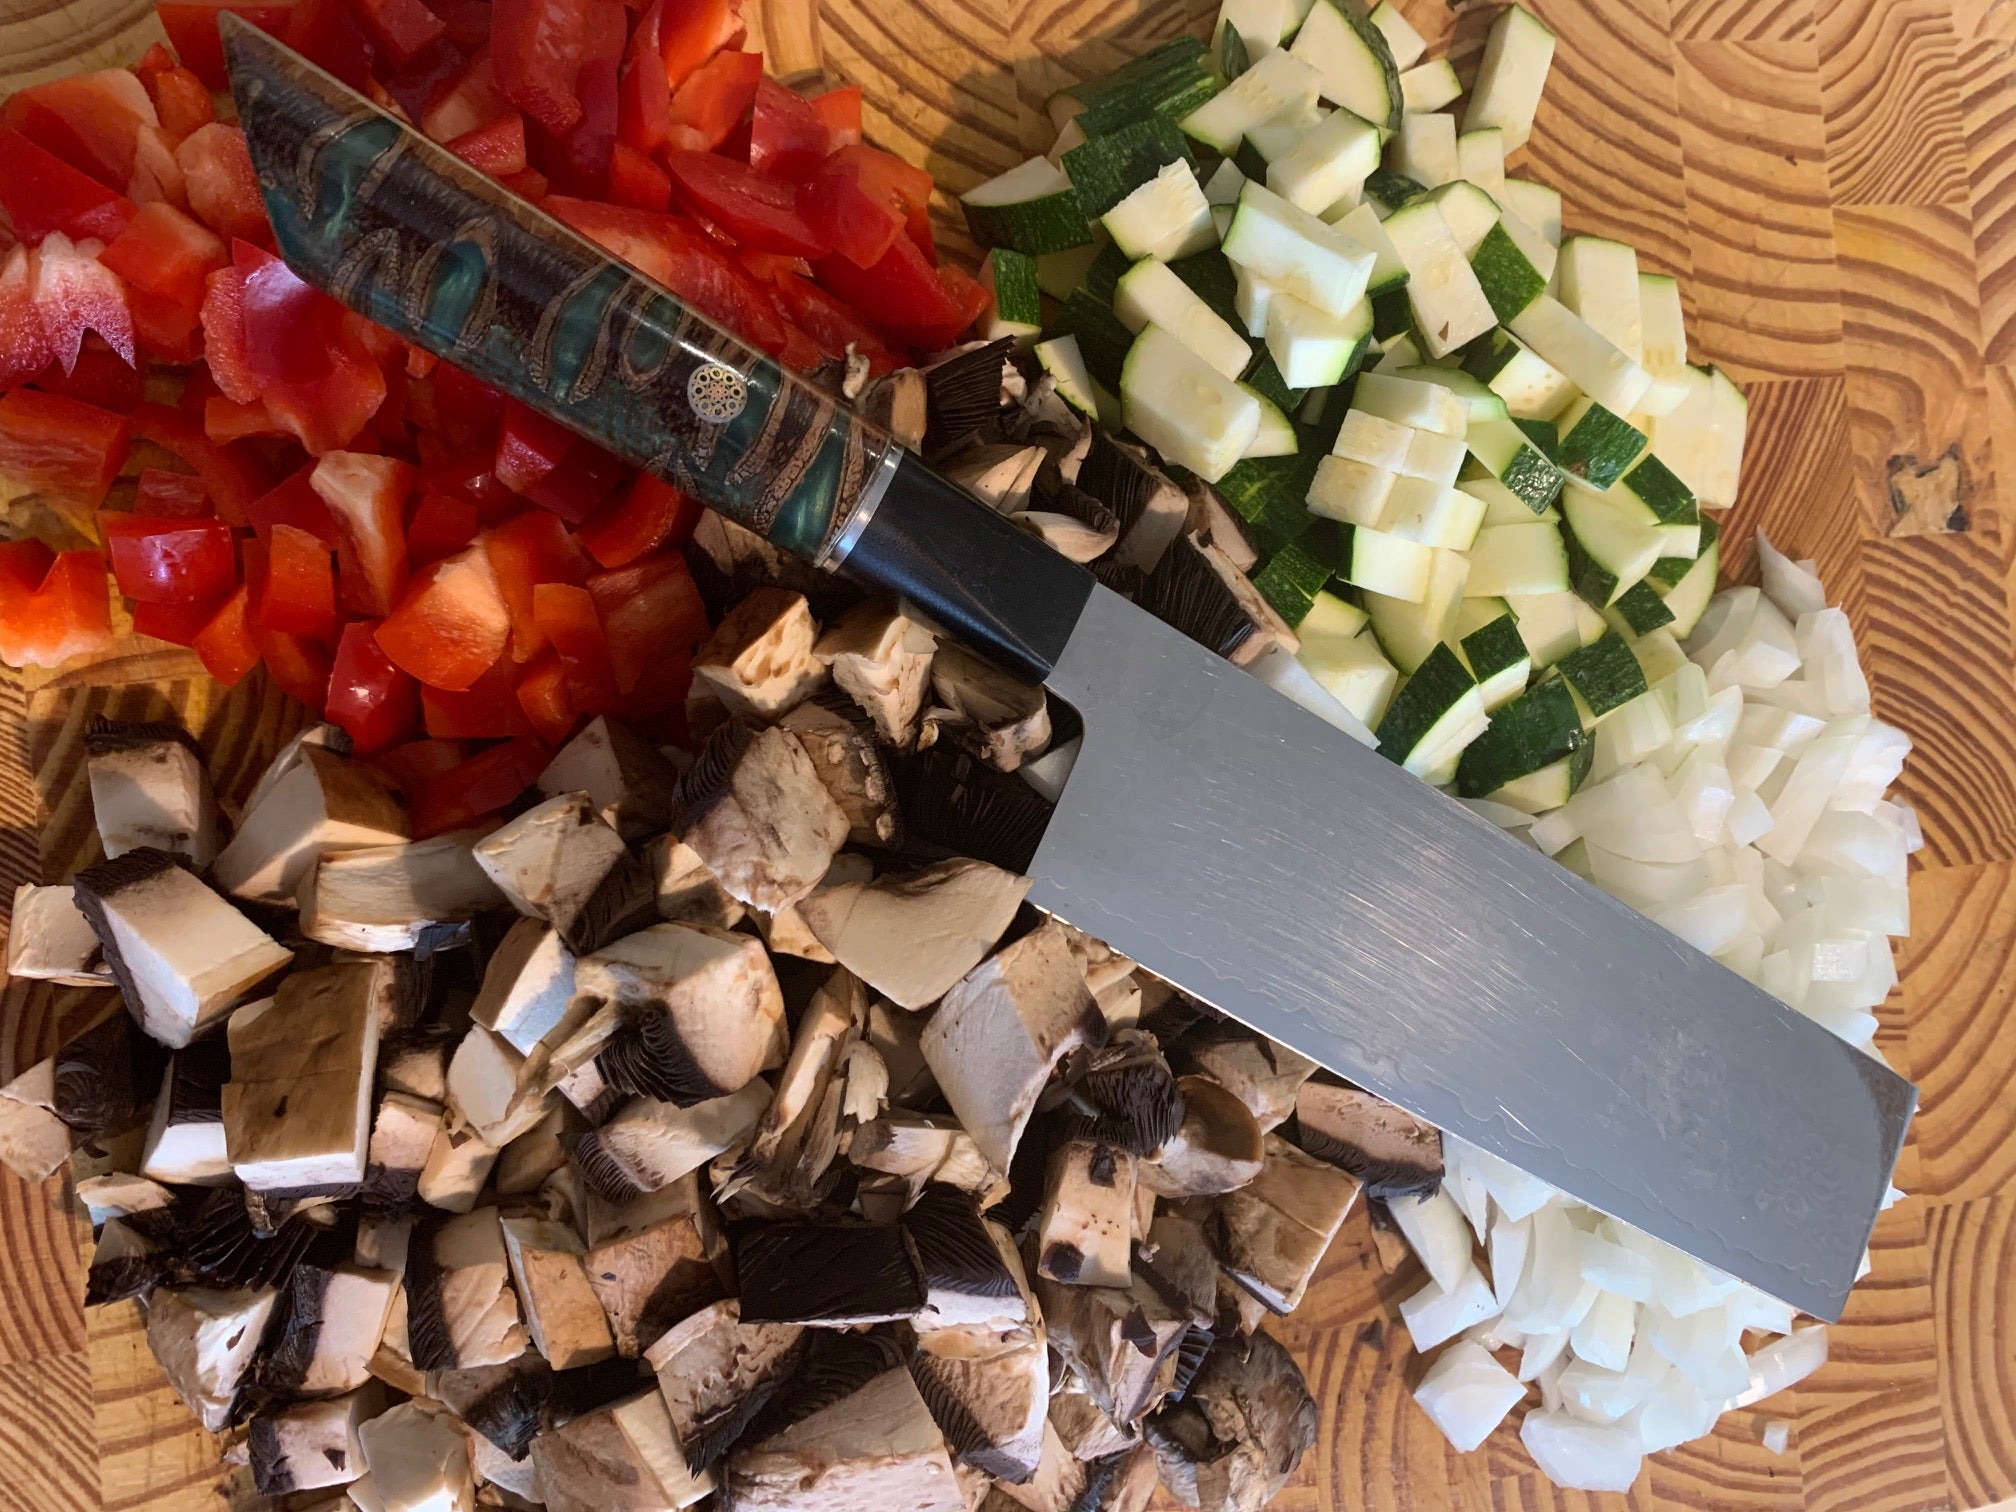 The Best Nakiri Knife for Slicing Vegetables Beautifully